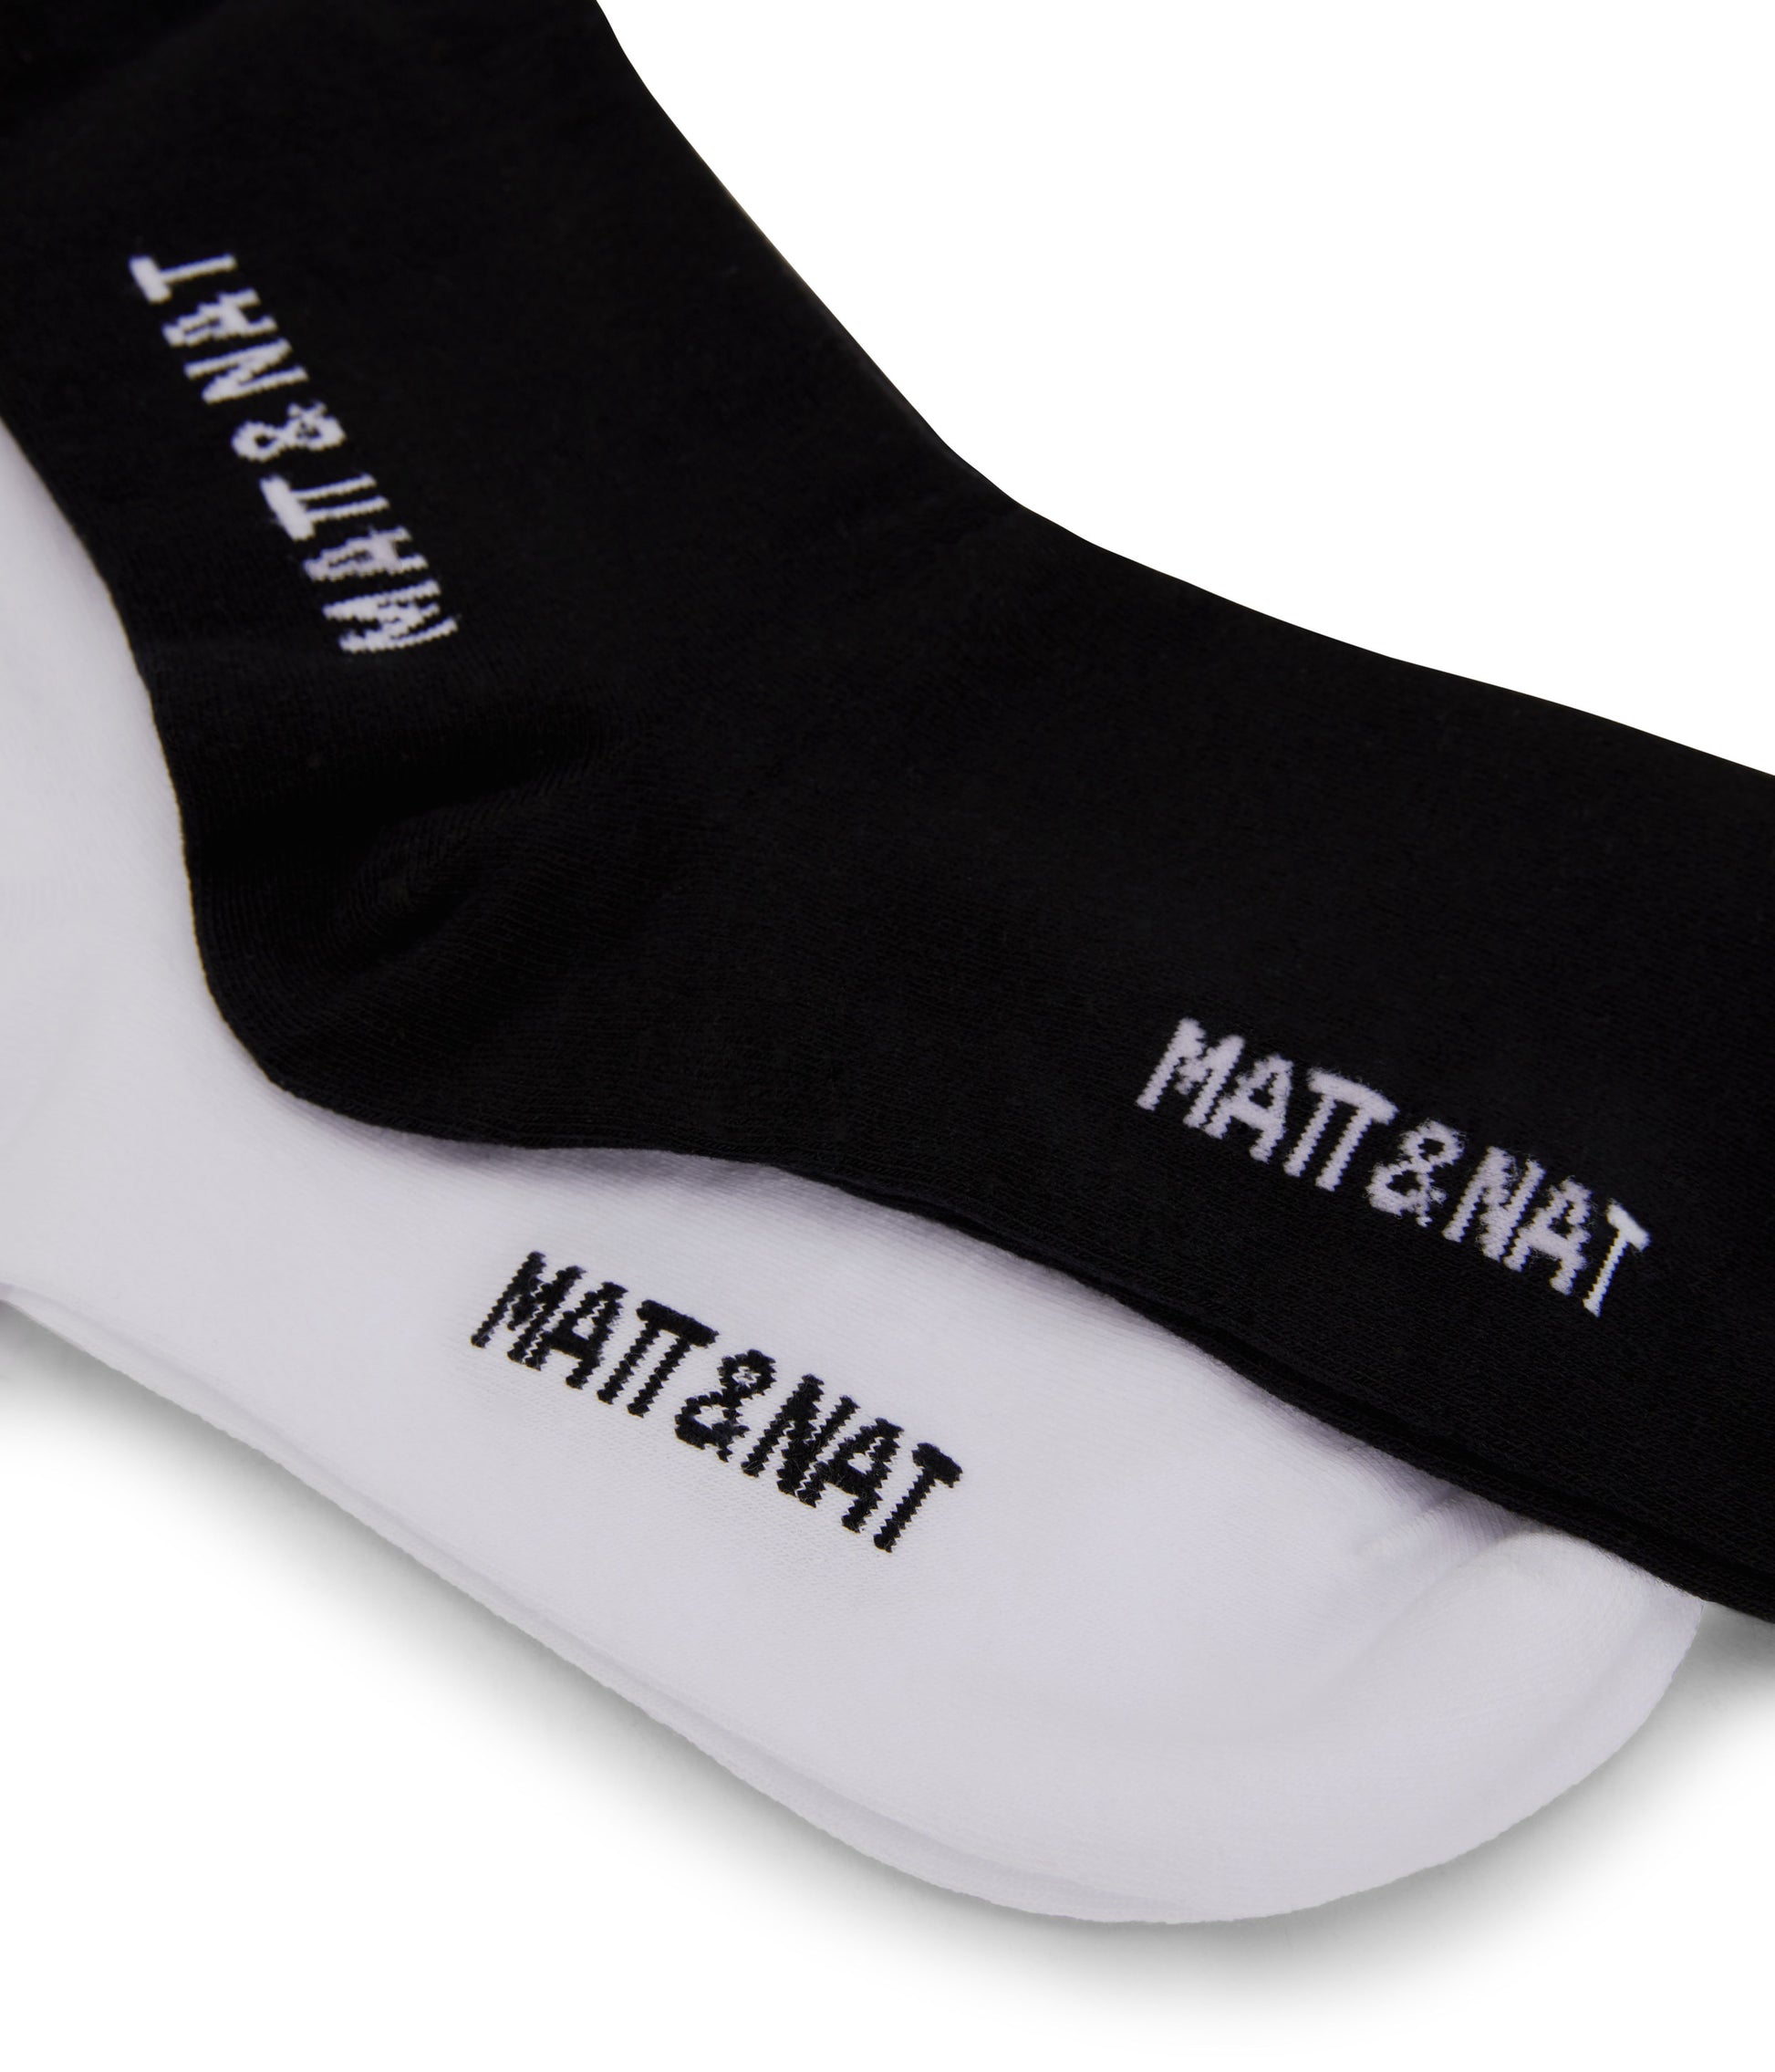 variant:: noir blanc -- sock noir blanc